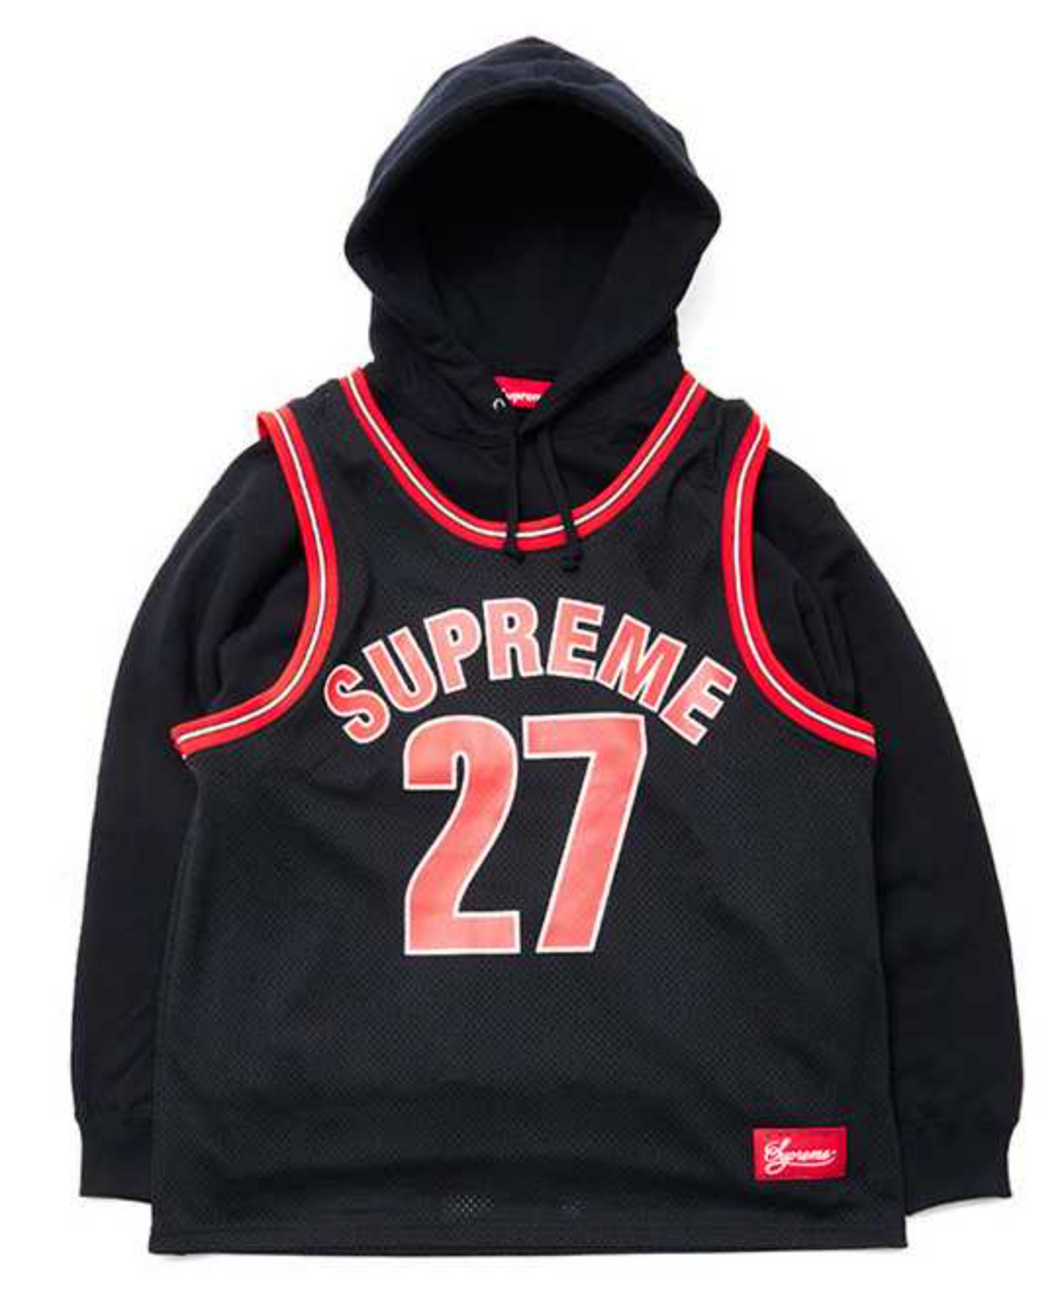 Supreme Basketball Jersey Hooded Sweatshirt/Honest Review 